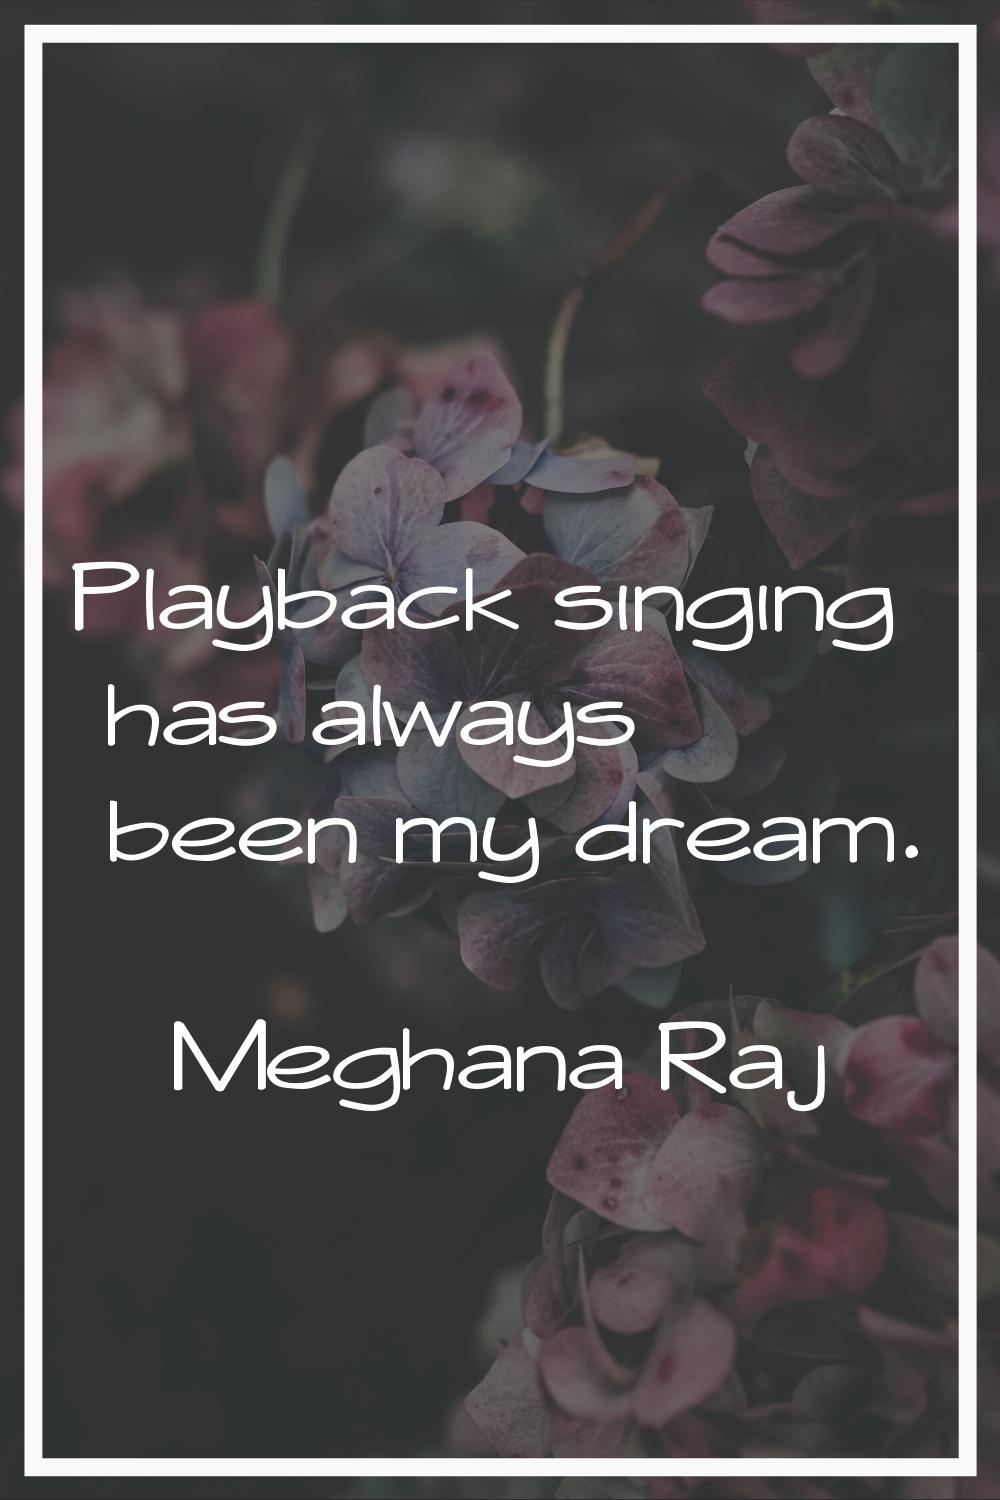 Playback singing has always been my dream.